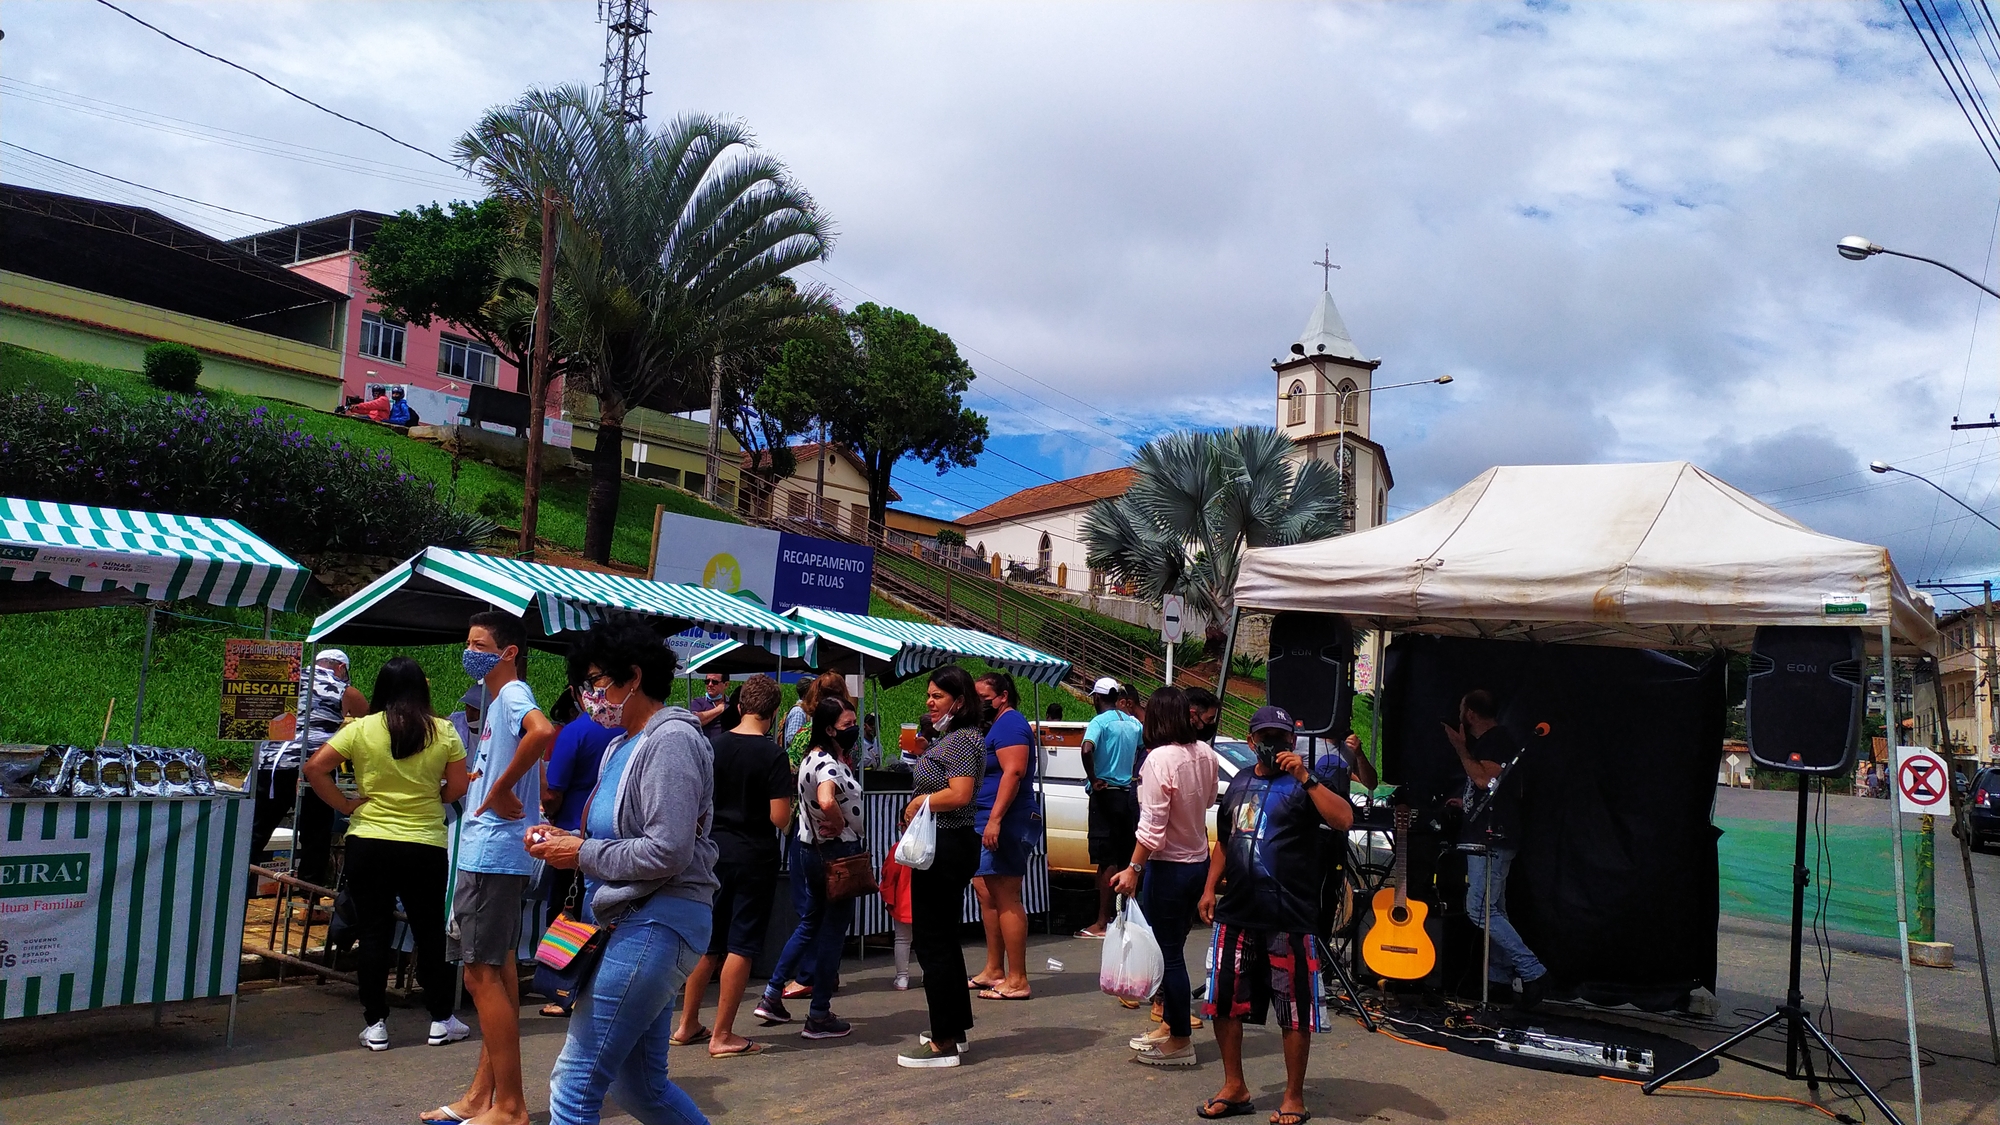 Foto tirada no centro da cidade de Paula Cândido, aparece as barracas dos feirantes, artista musical e os visitantes)